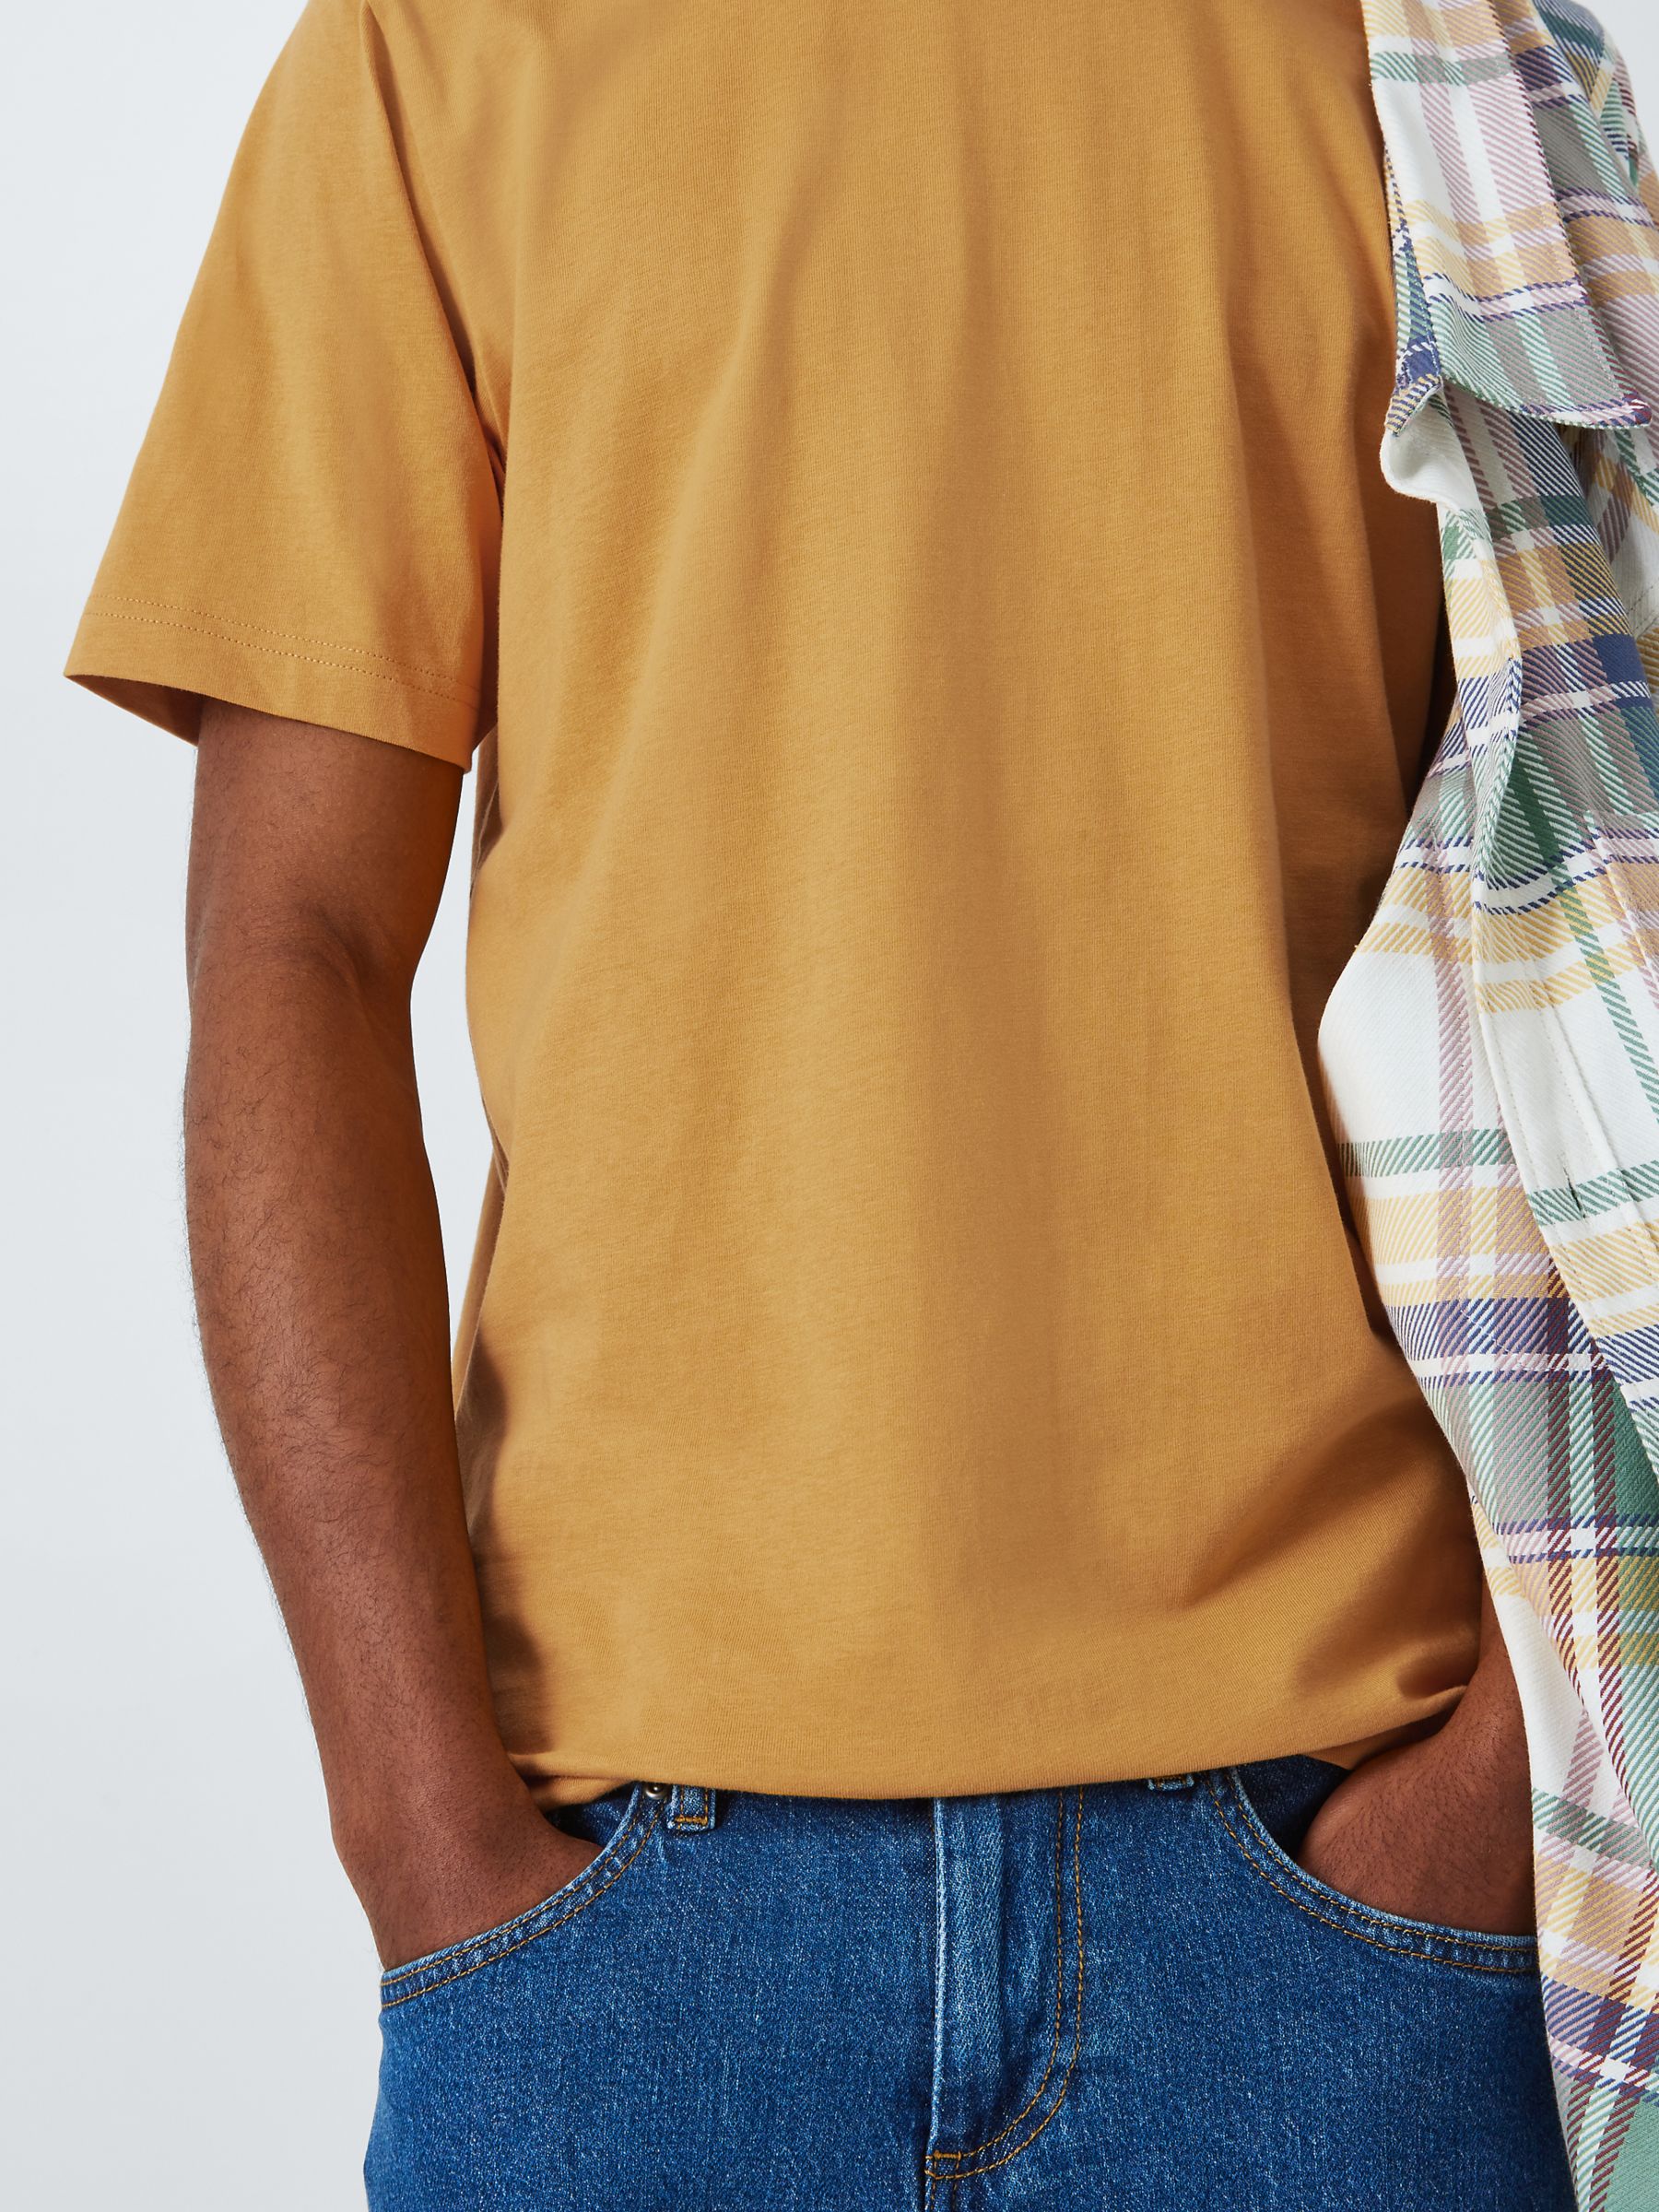 John Lewis ANYDAY Short Sleeve Plain T-Shirt, Honey Yellow, S